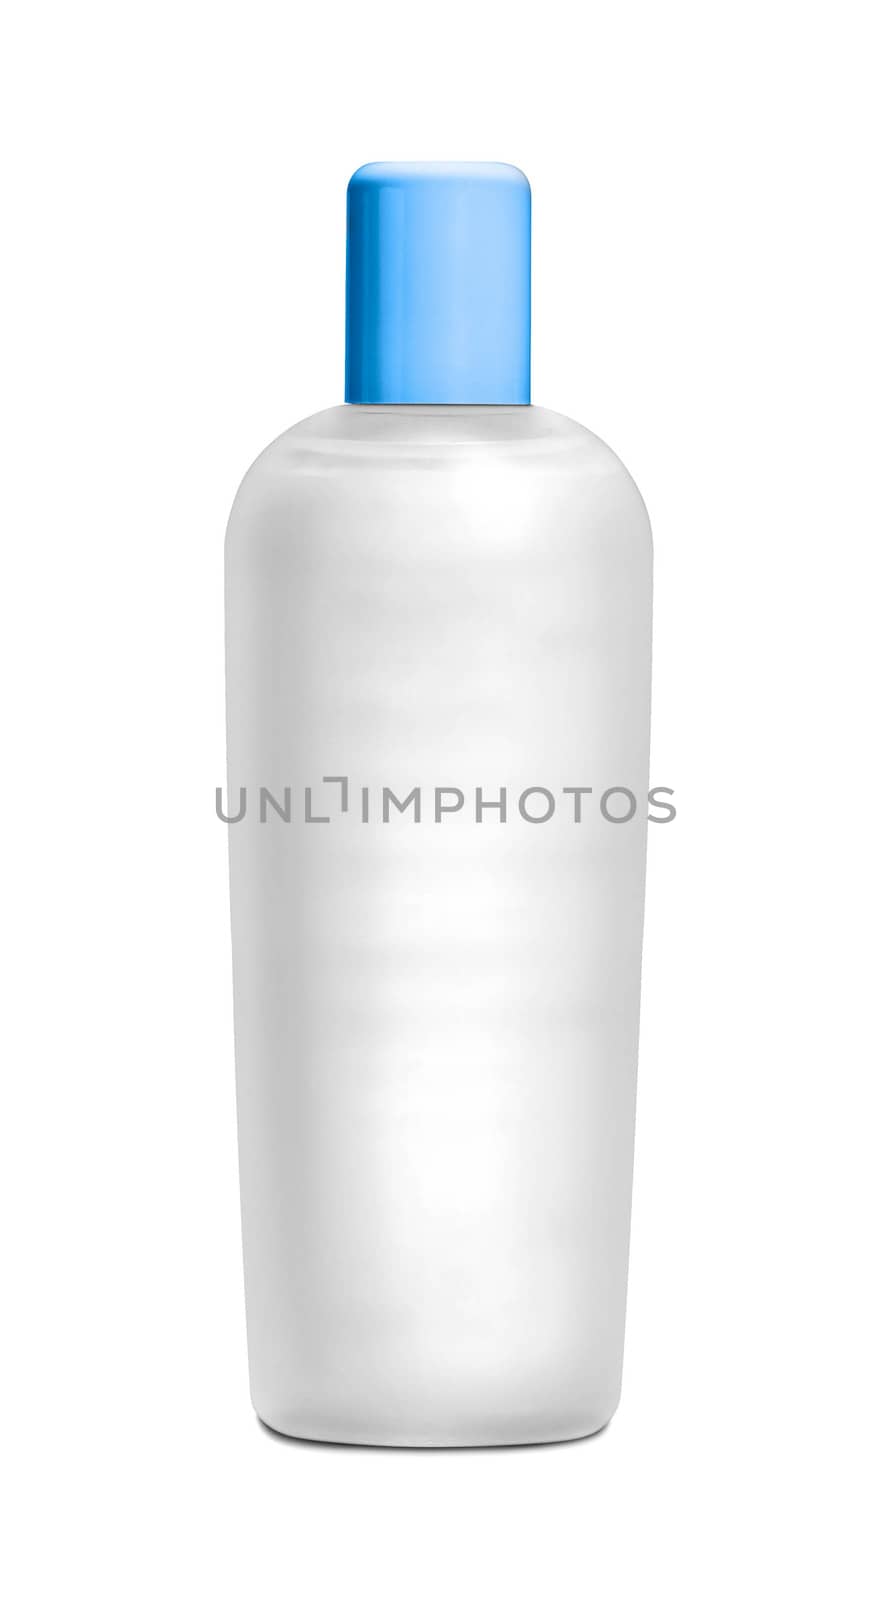 Shampoo bottle isolated on white background by shutswis